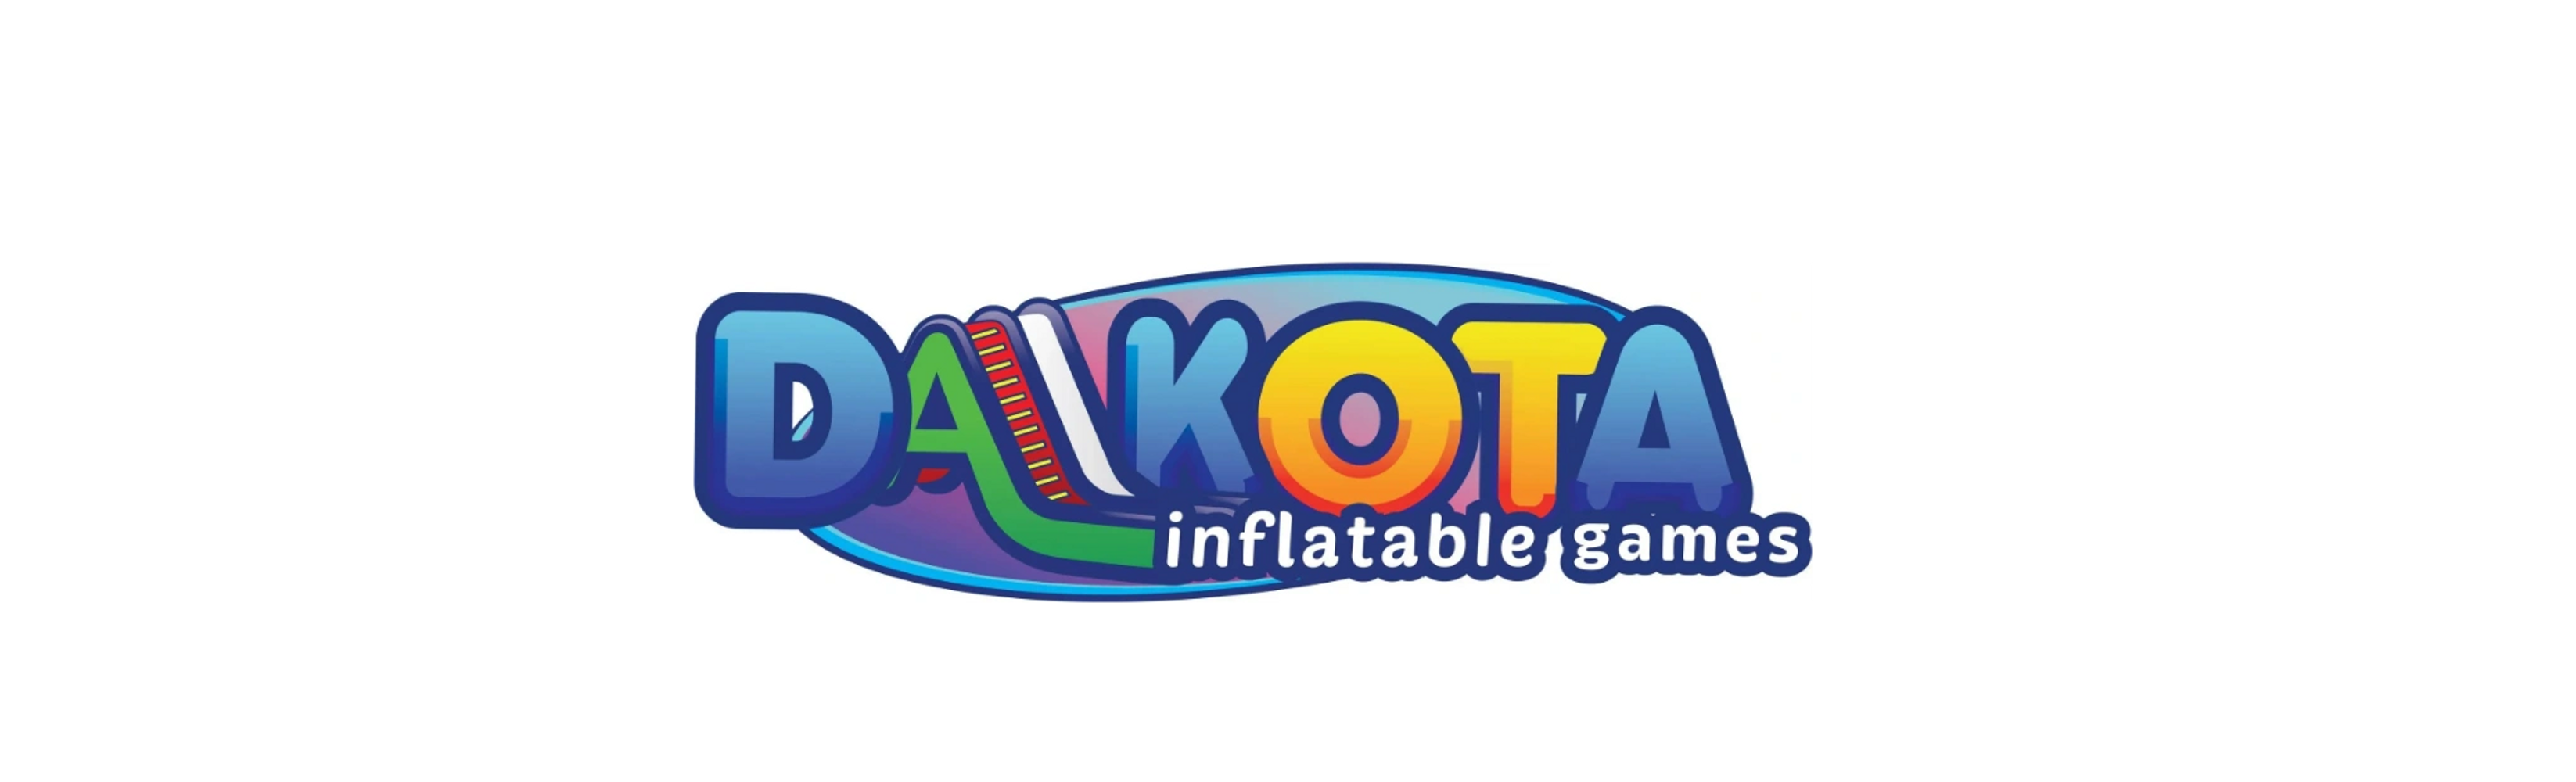 For OUTDOOR rentals contact Dakota Inflatable Games:  dakotainflatables@daktel.com
Phone:  (701) 566